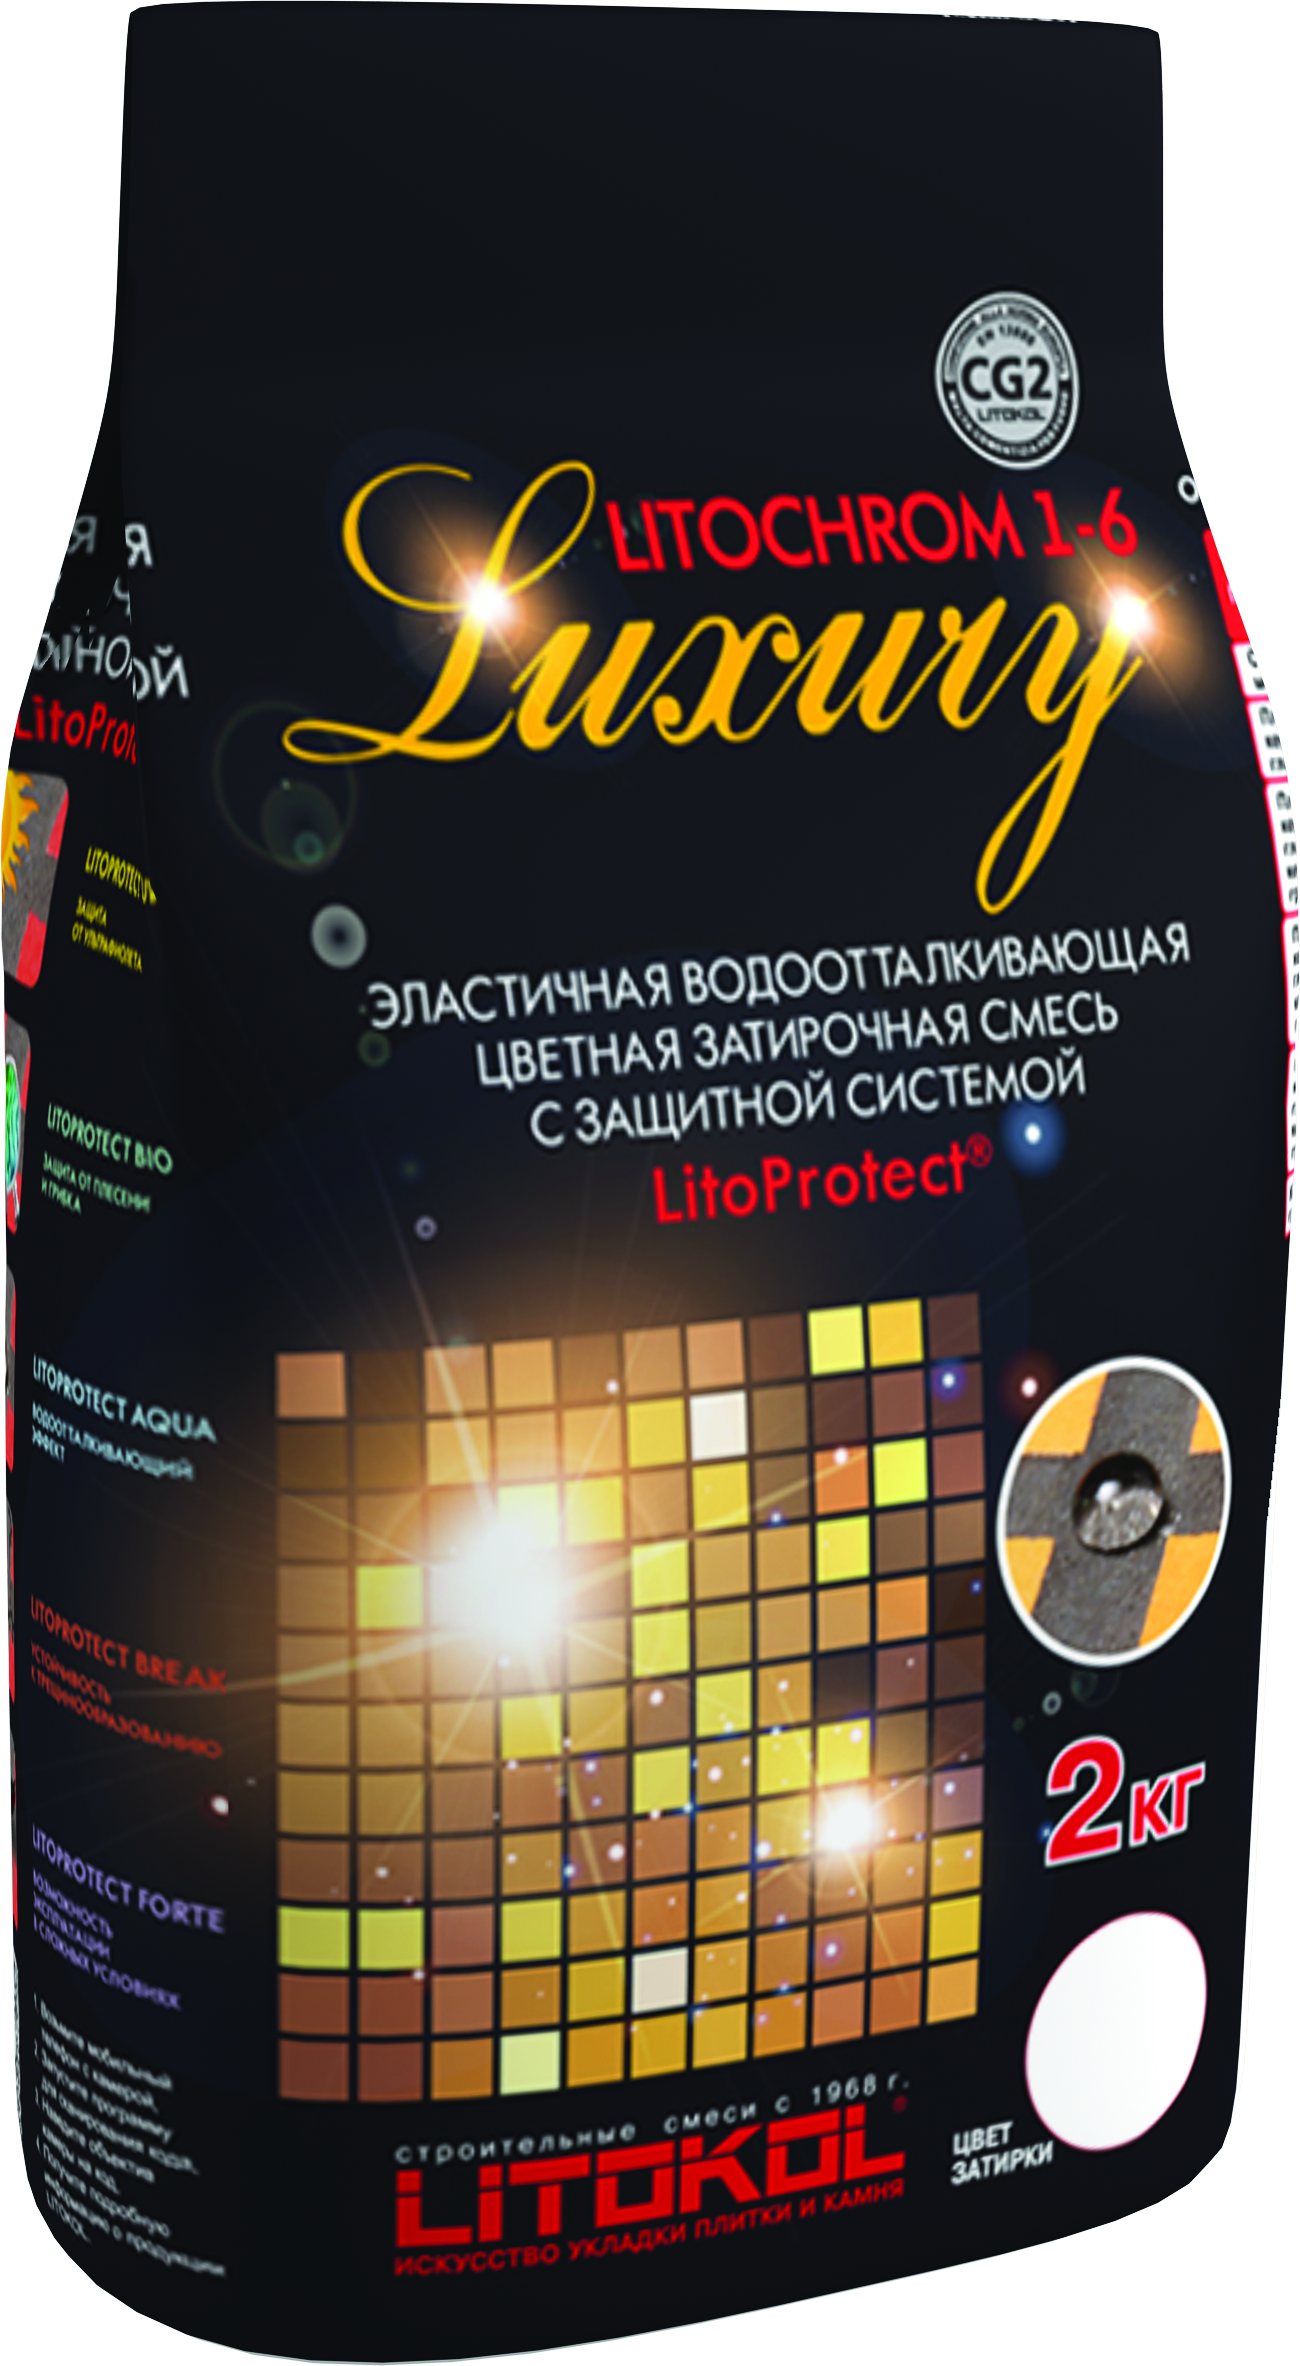 Купить Litokol Litochrom 1-6 Luxury C.30, 2 кг